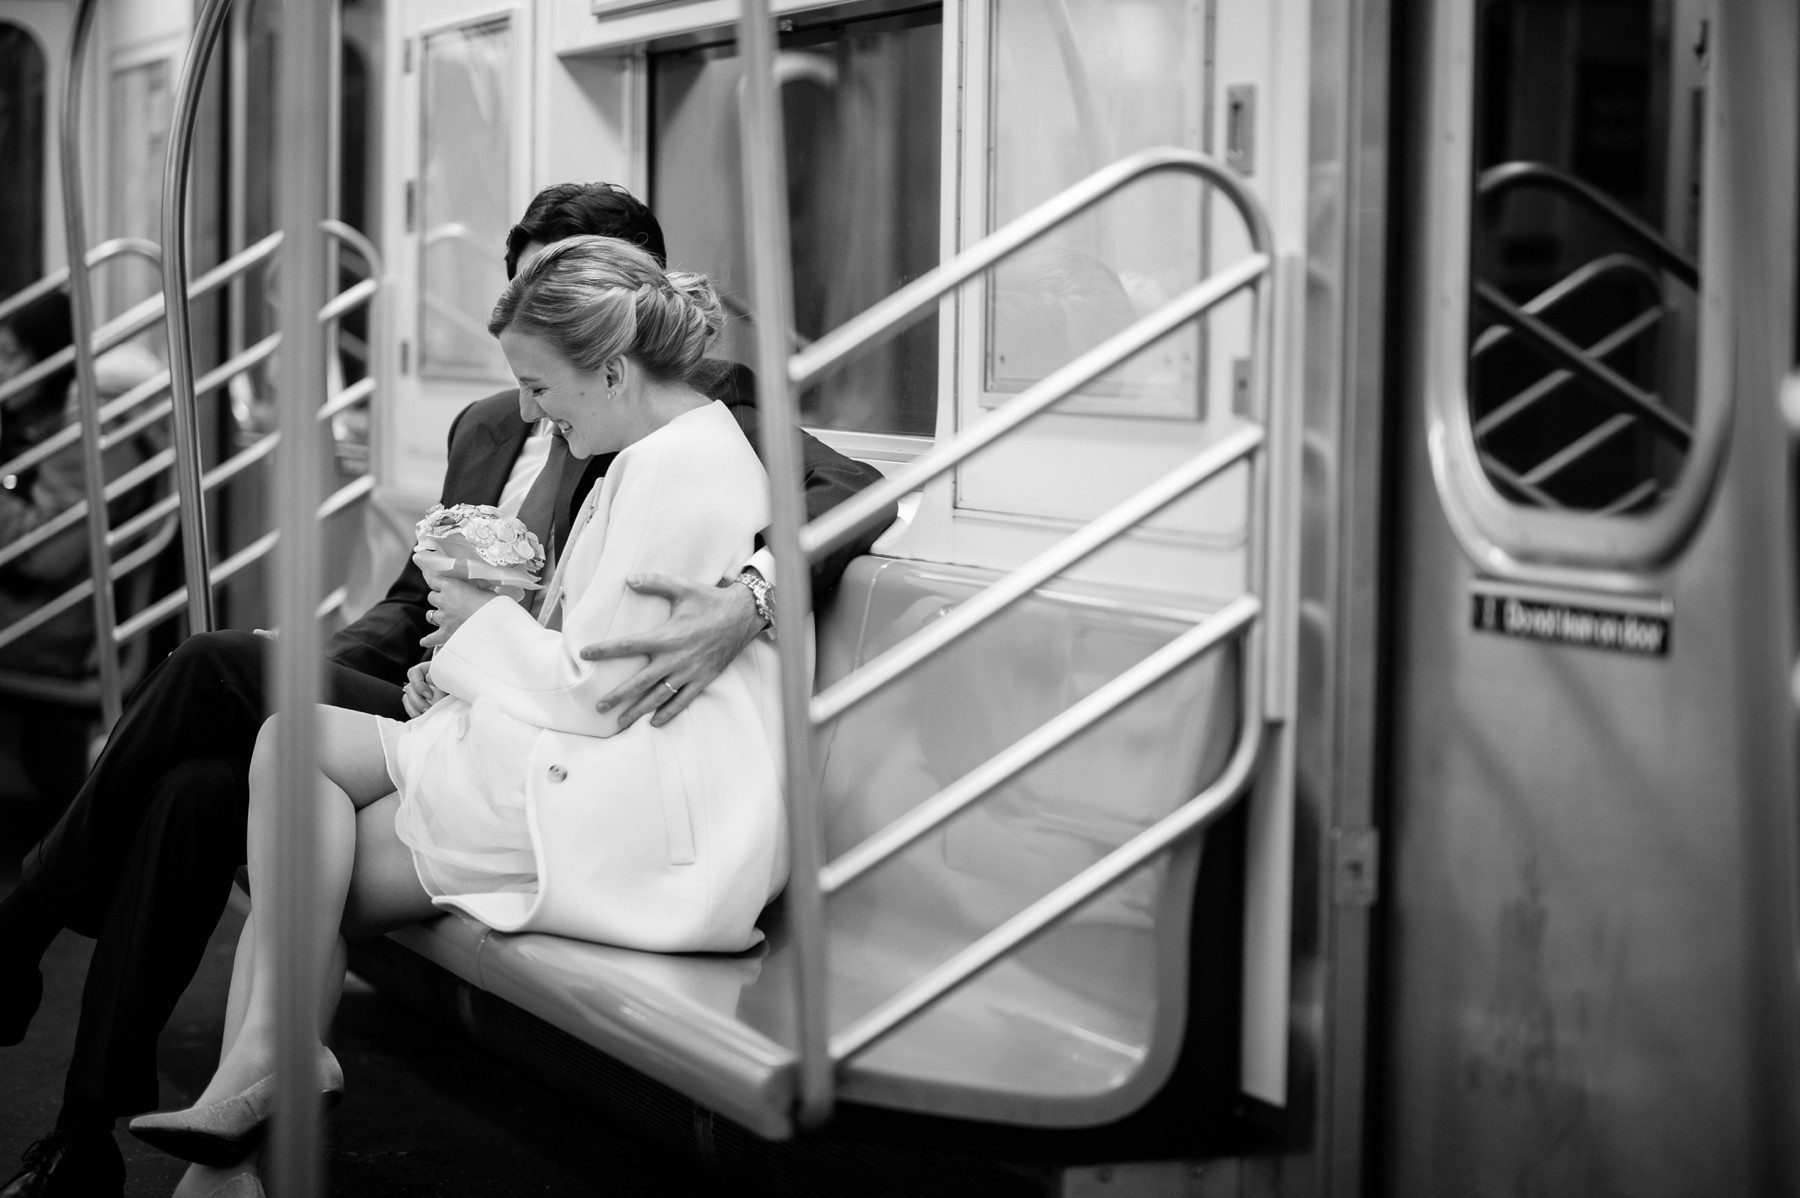 elope-new-york-subway-bride